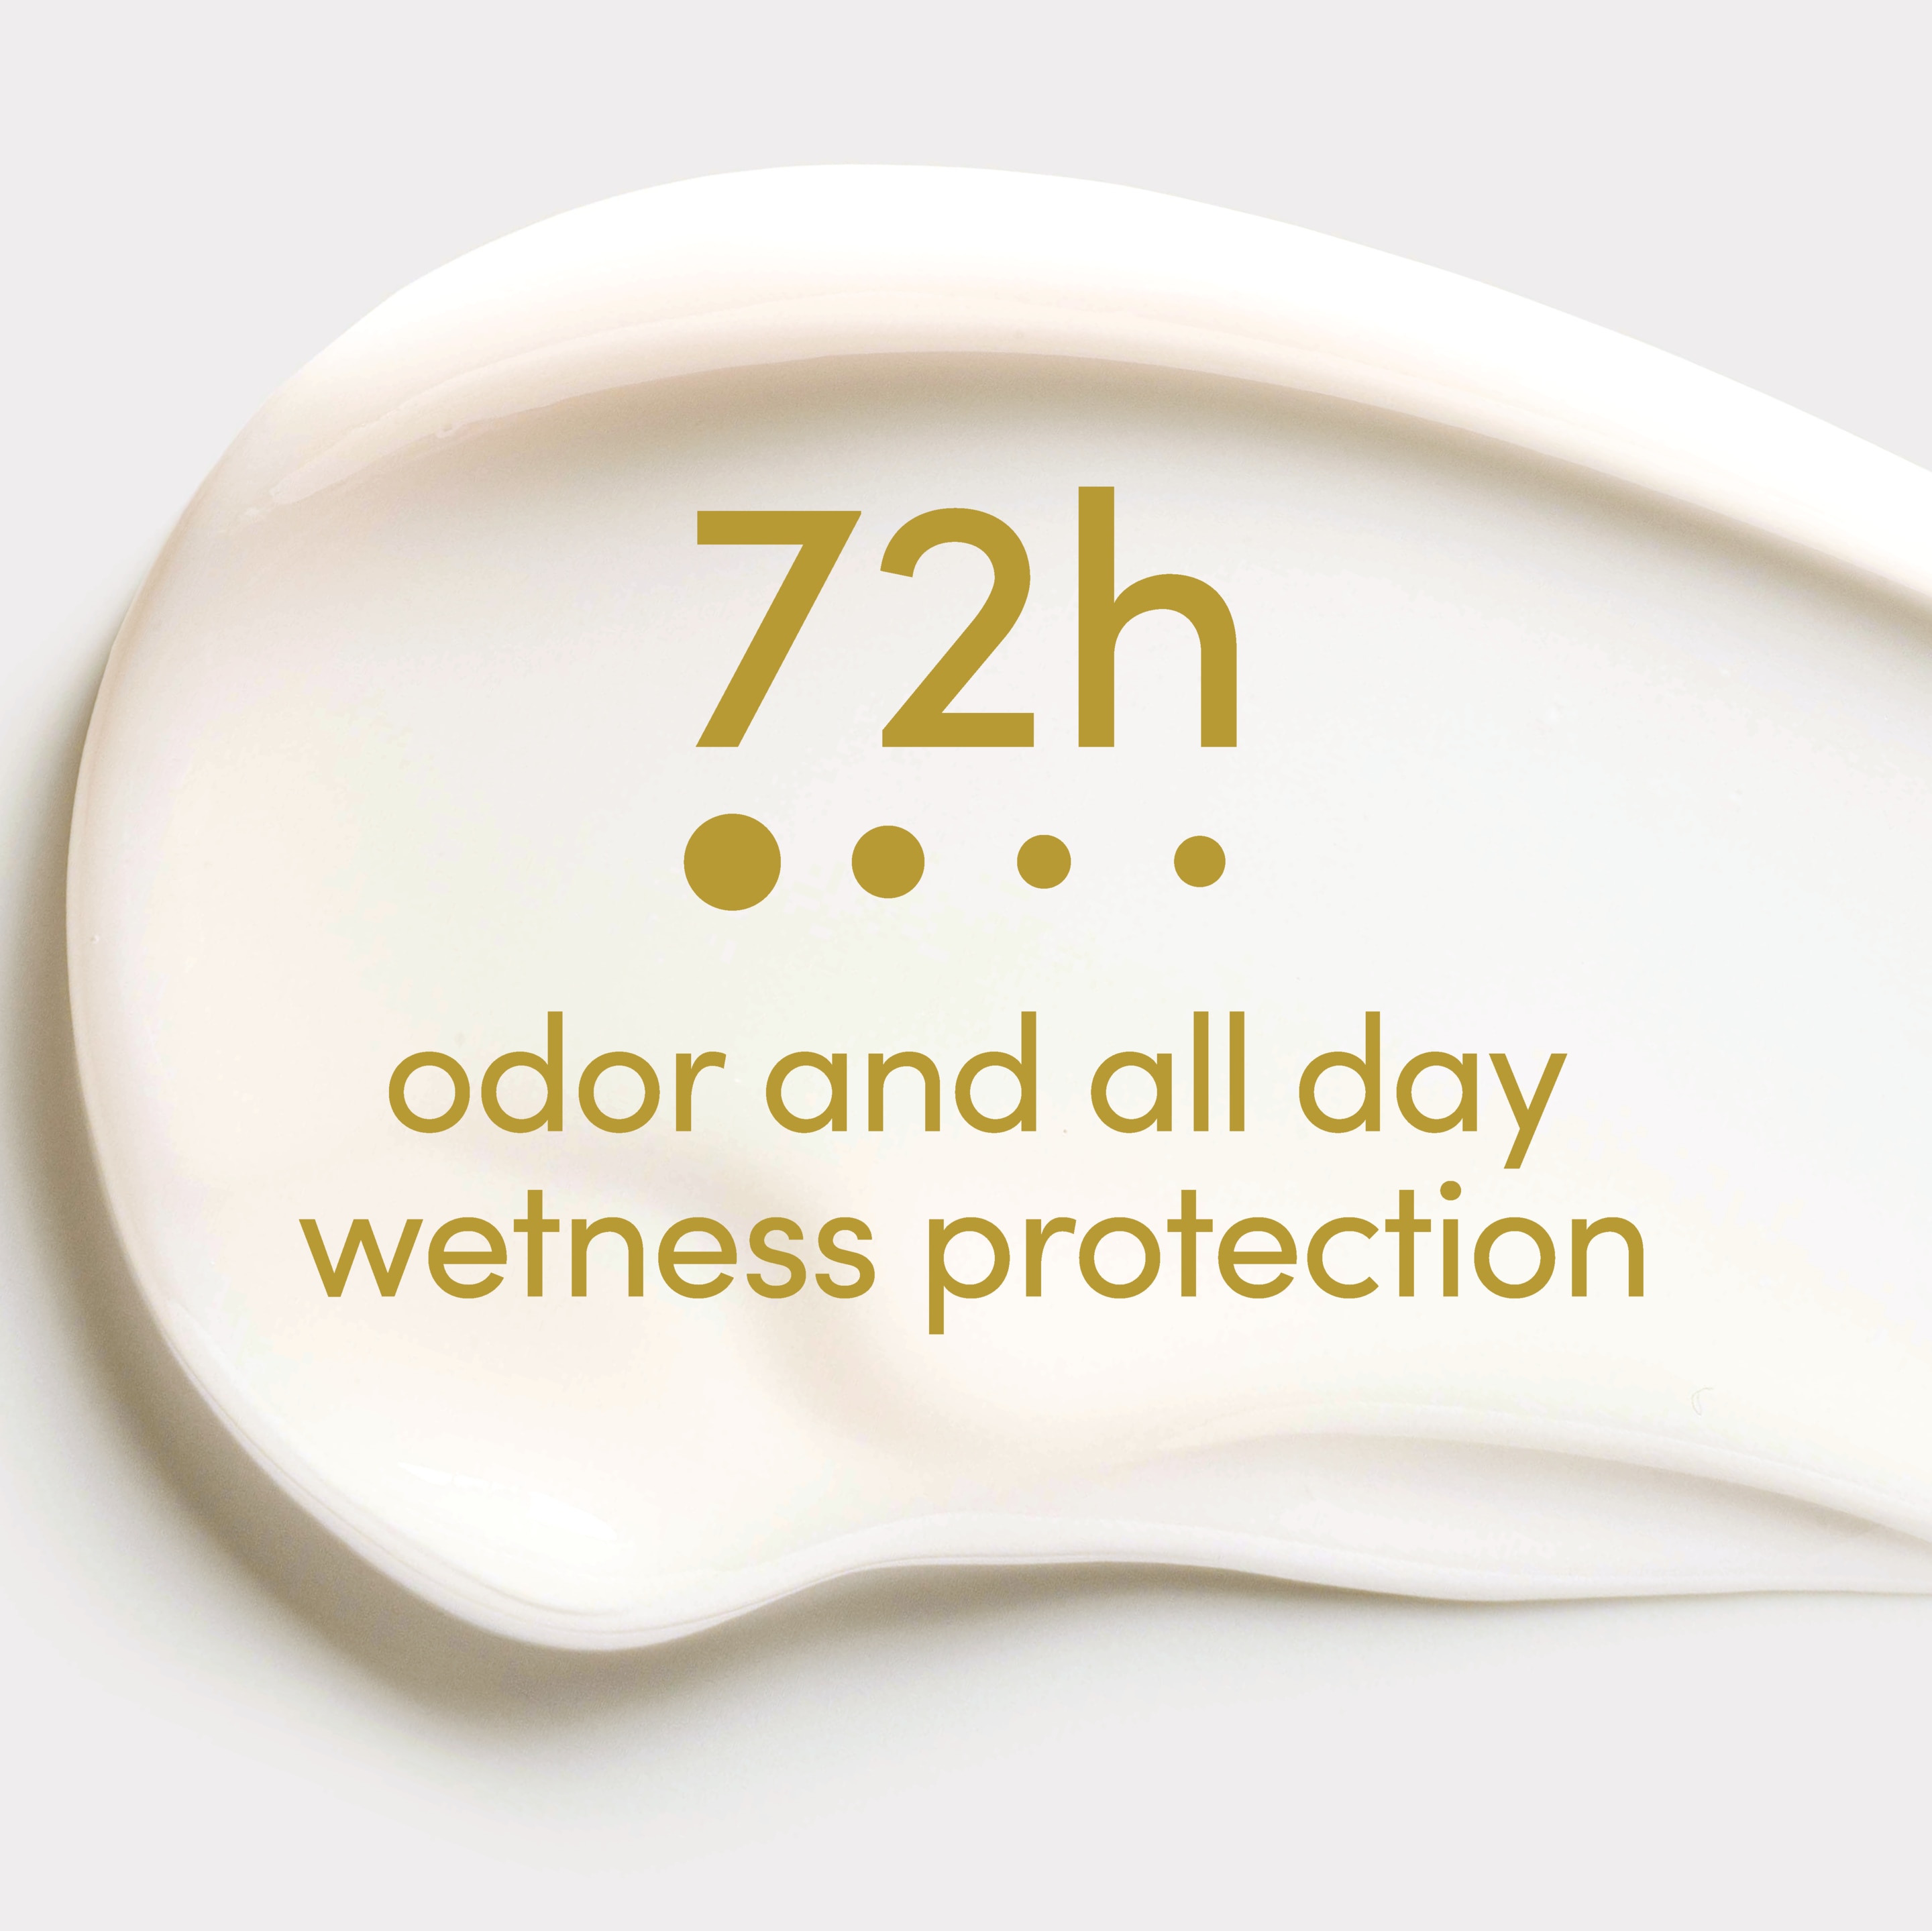 Dove Beauty Advanced Care Sheer Fresh 48-hour Women's Antiperspirant &  Deodorant Dry Spray - 3.8oz : Target